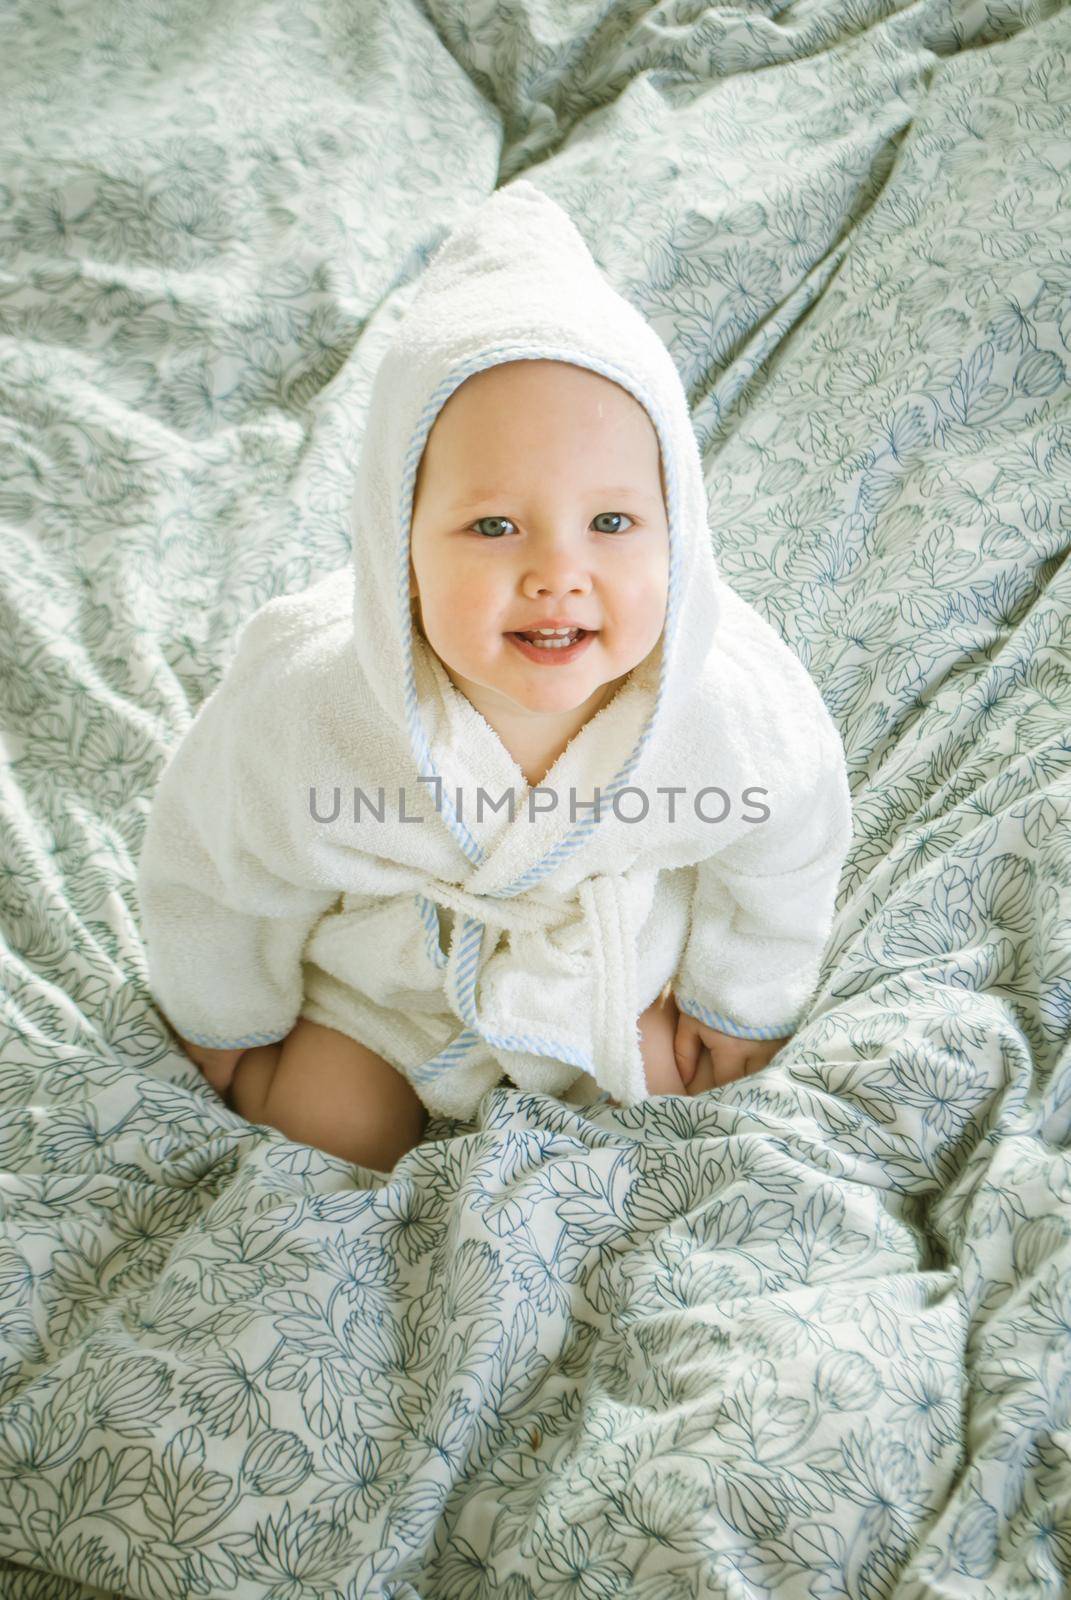 baby after bath in robe by maramorosz